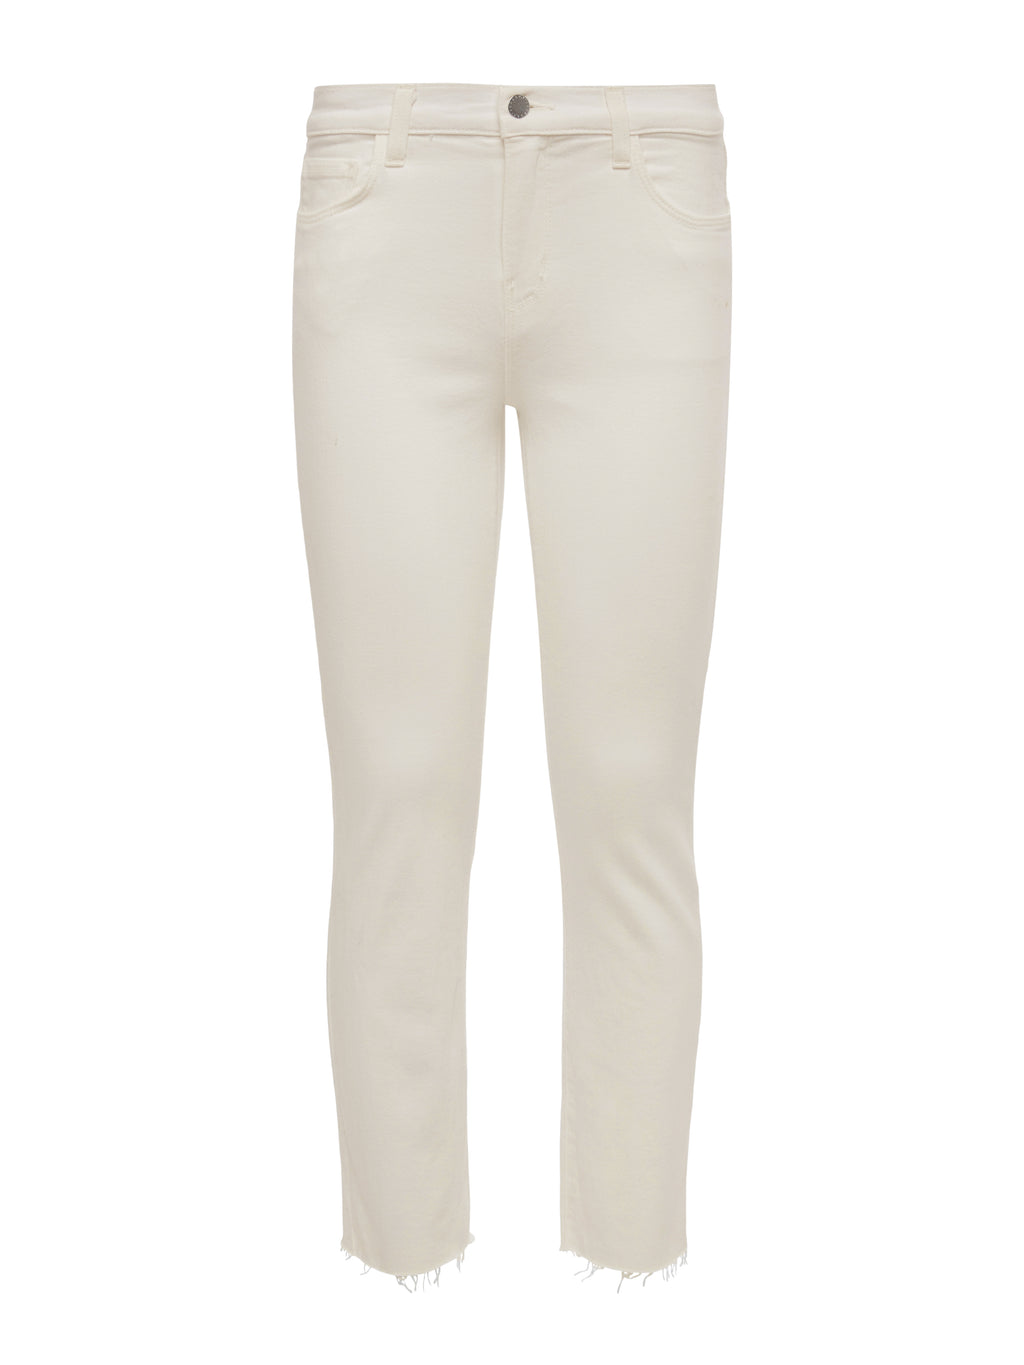 L'AGENCE Sada High-Rise Slim-Leg Cropped Jean In Vintage White